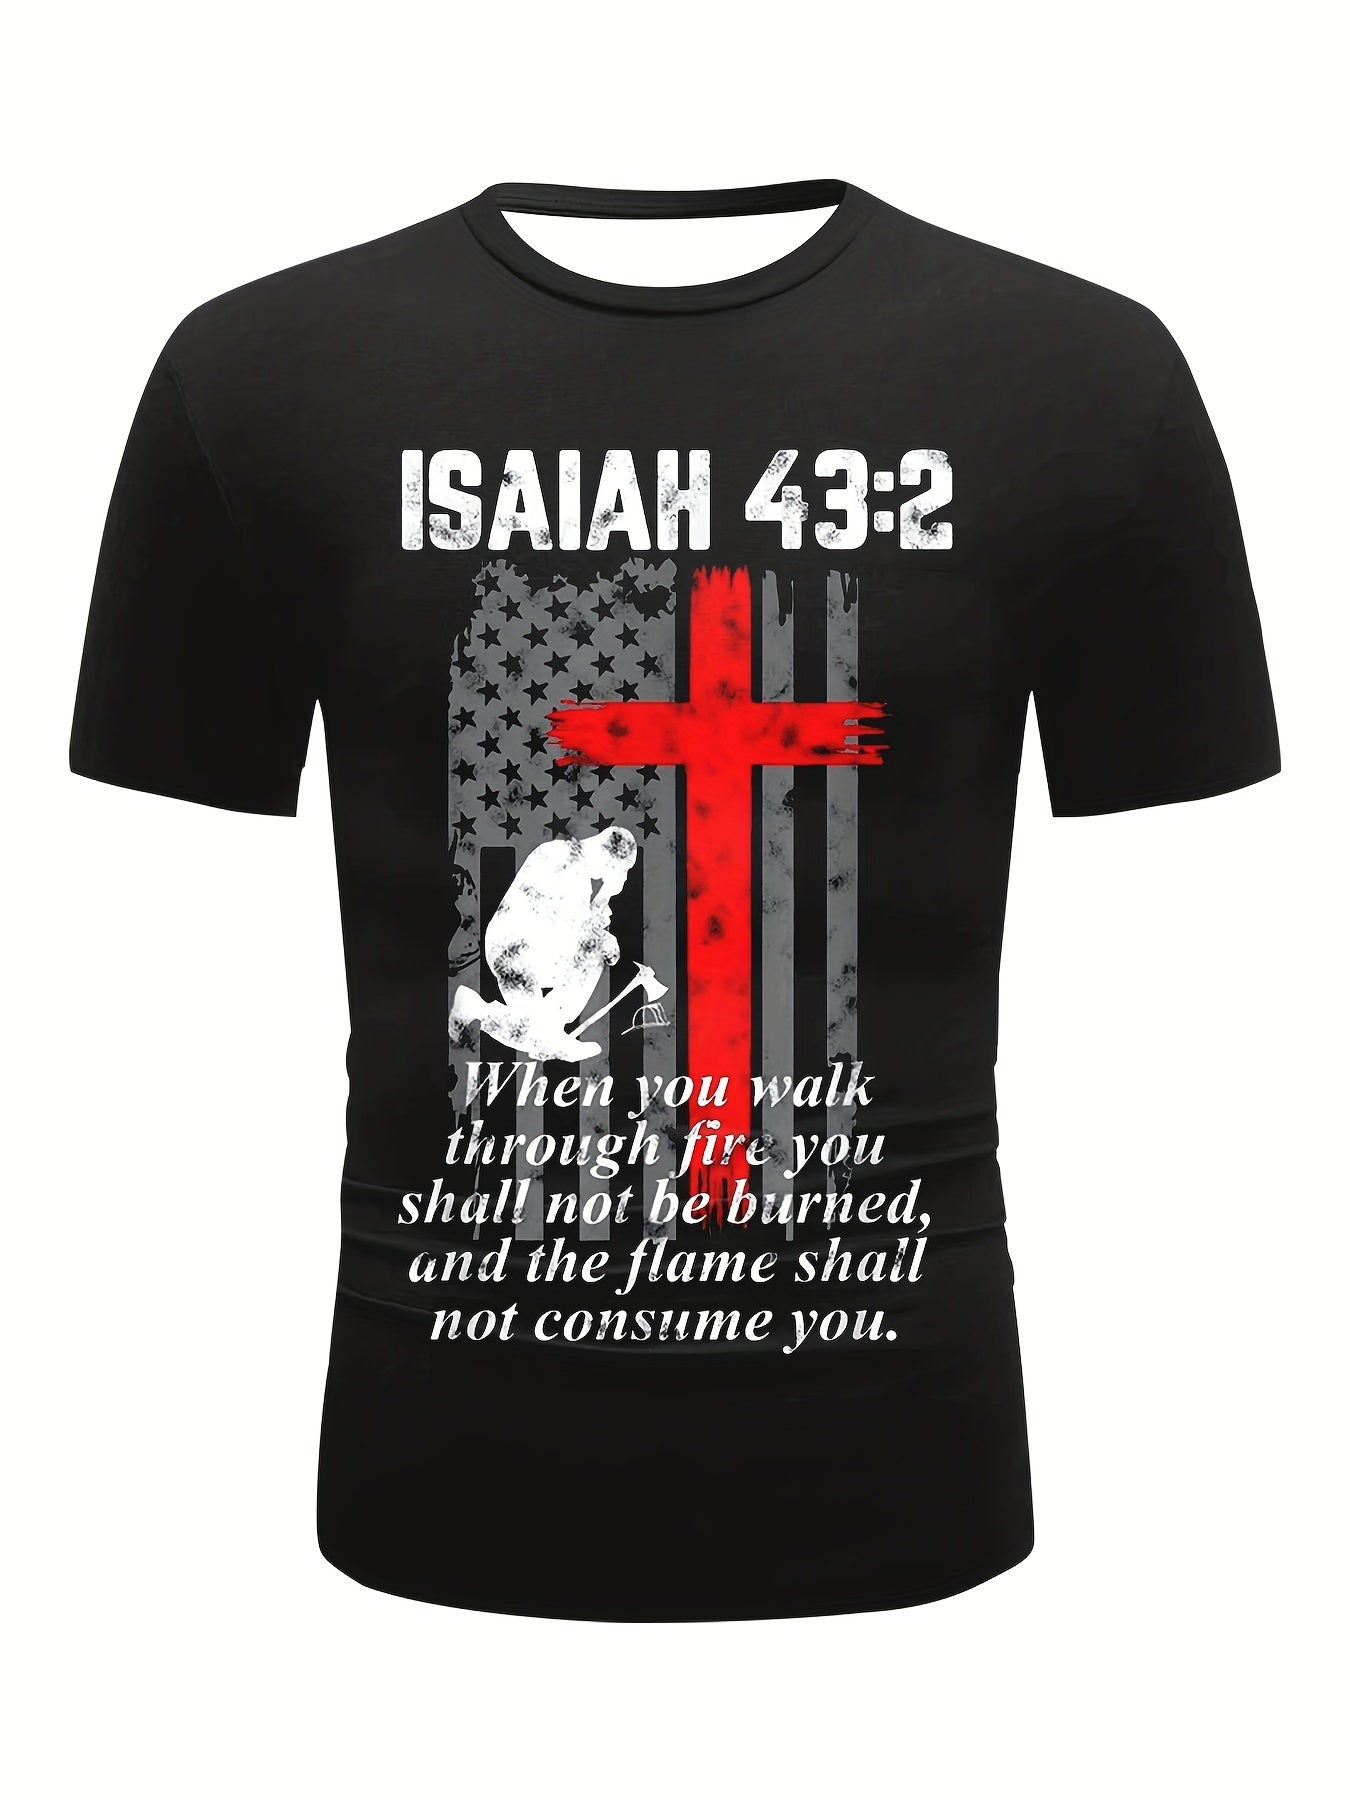 Isaiah 43:2 Men's Christian T-shirt claimedbygoddesigns